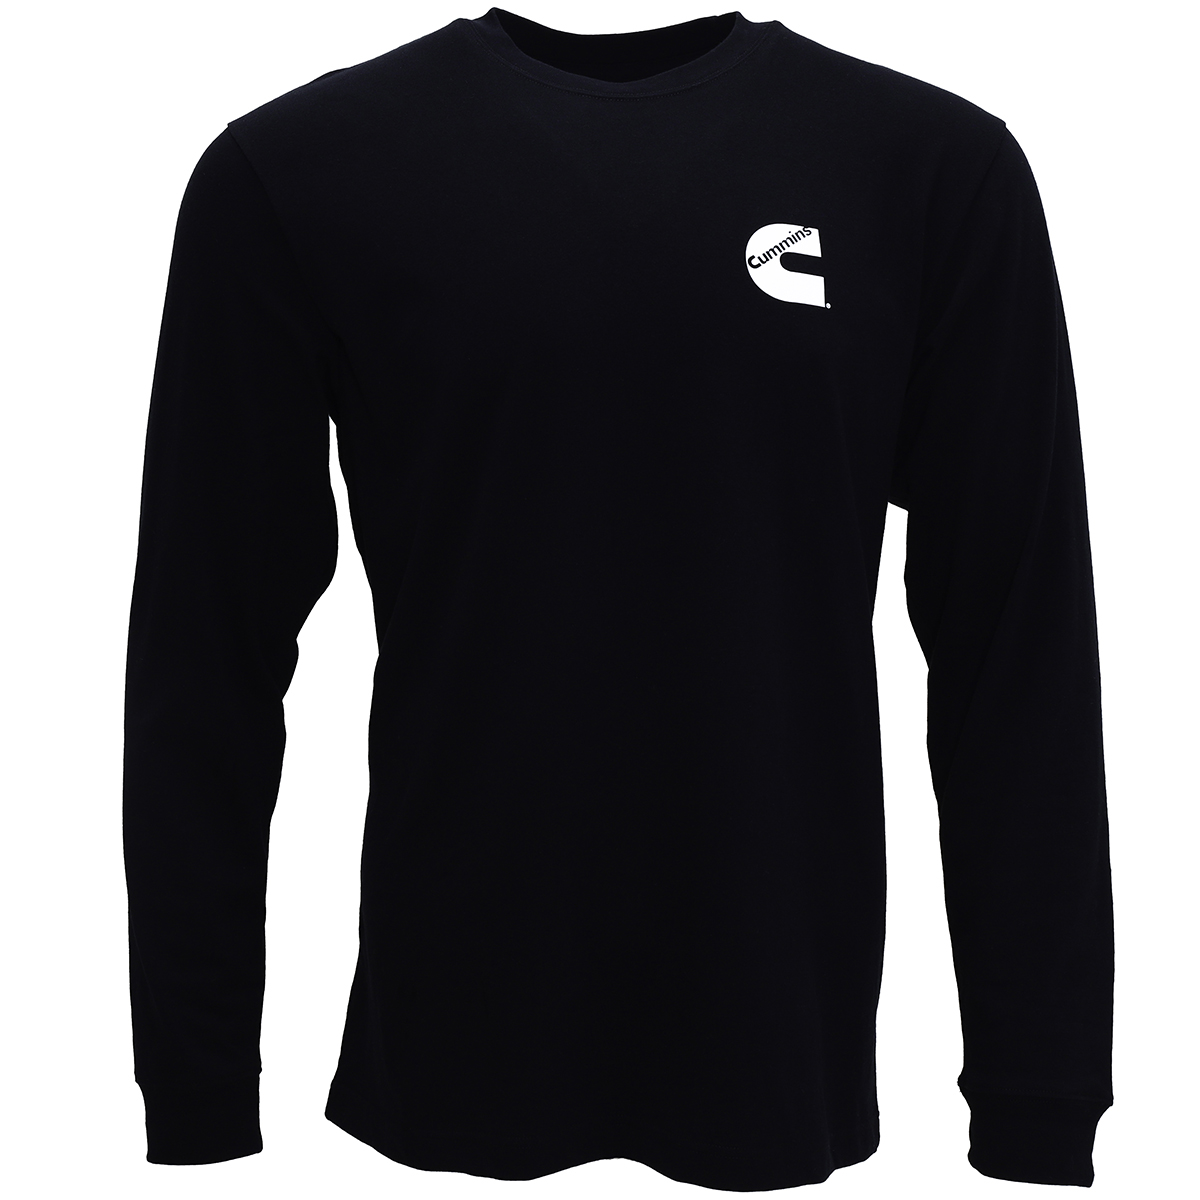 Cummins Unisex Long Sleeve T-shirt Black All Cotton Tee CMN4776 - Large